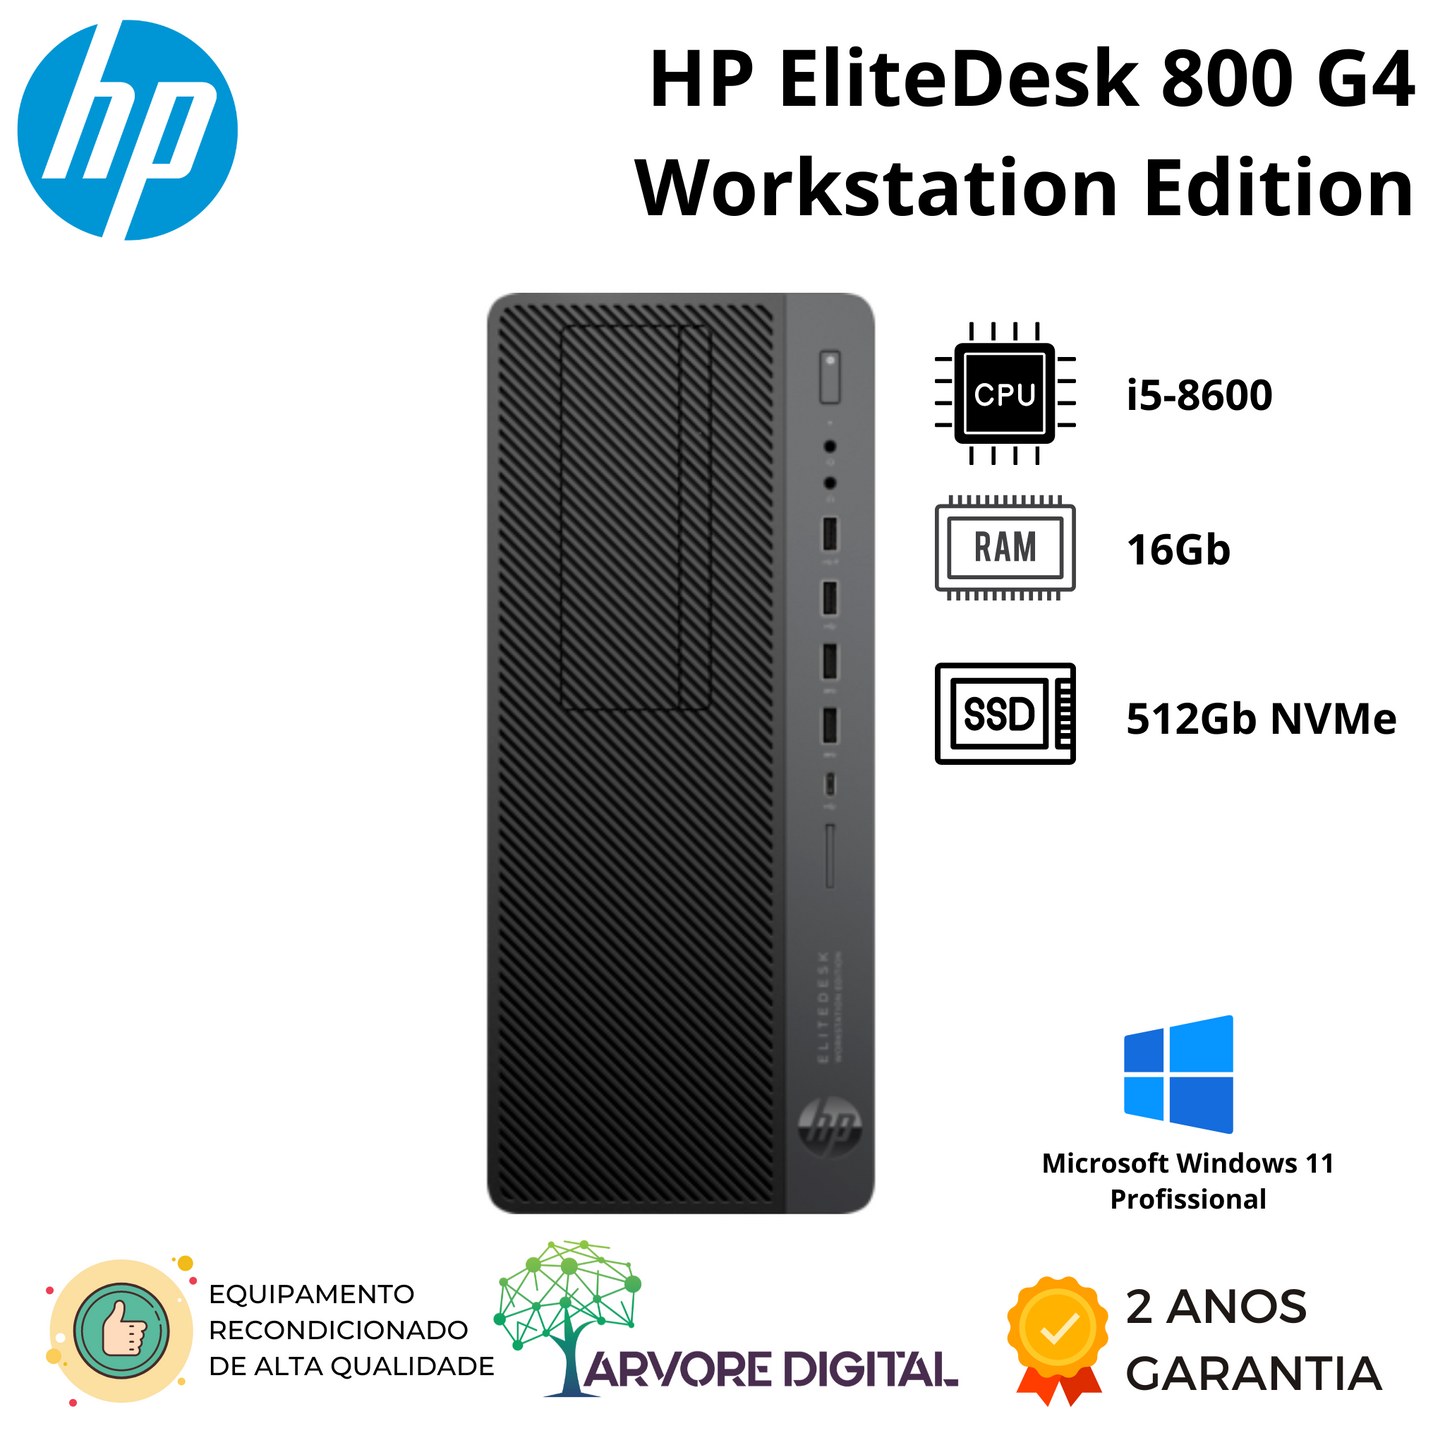 HP EliteDesk 800G4 Workstation Edition